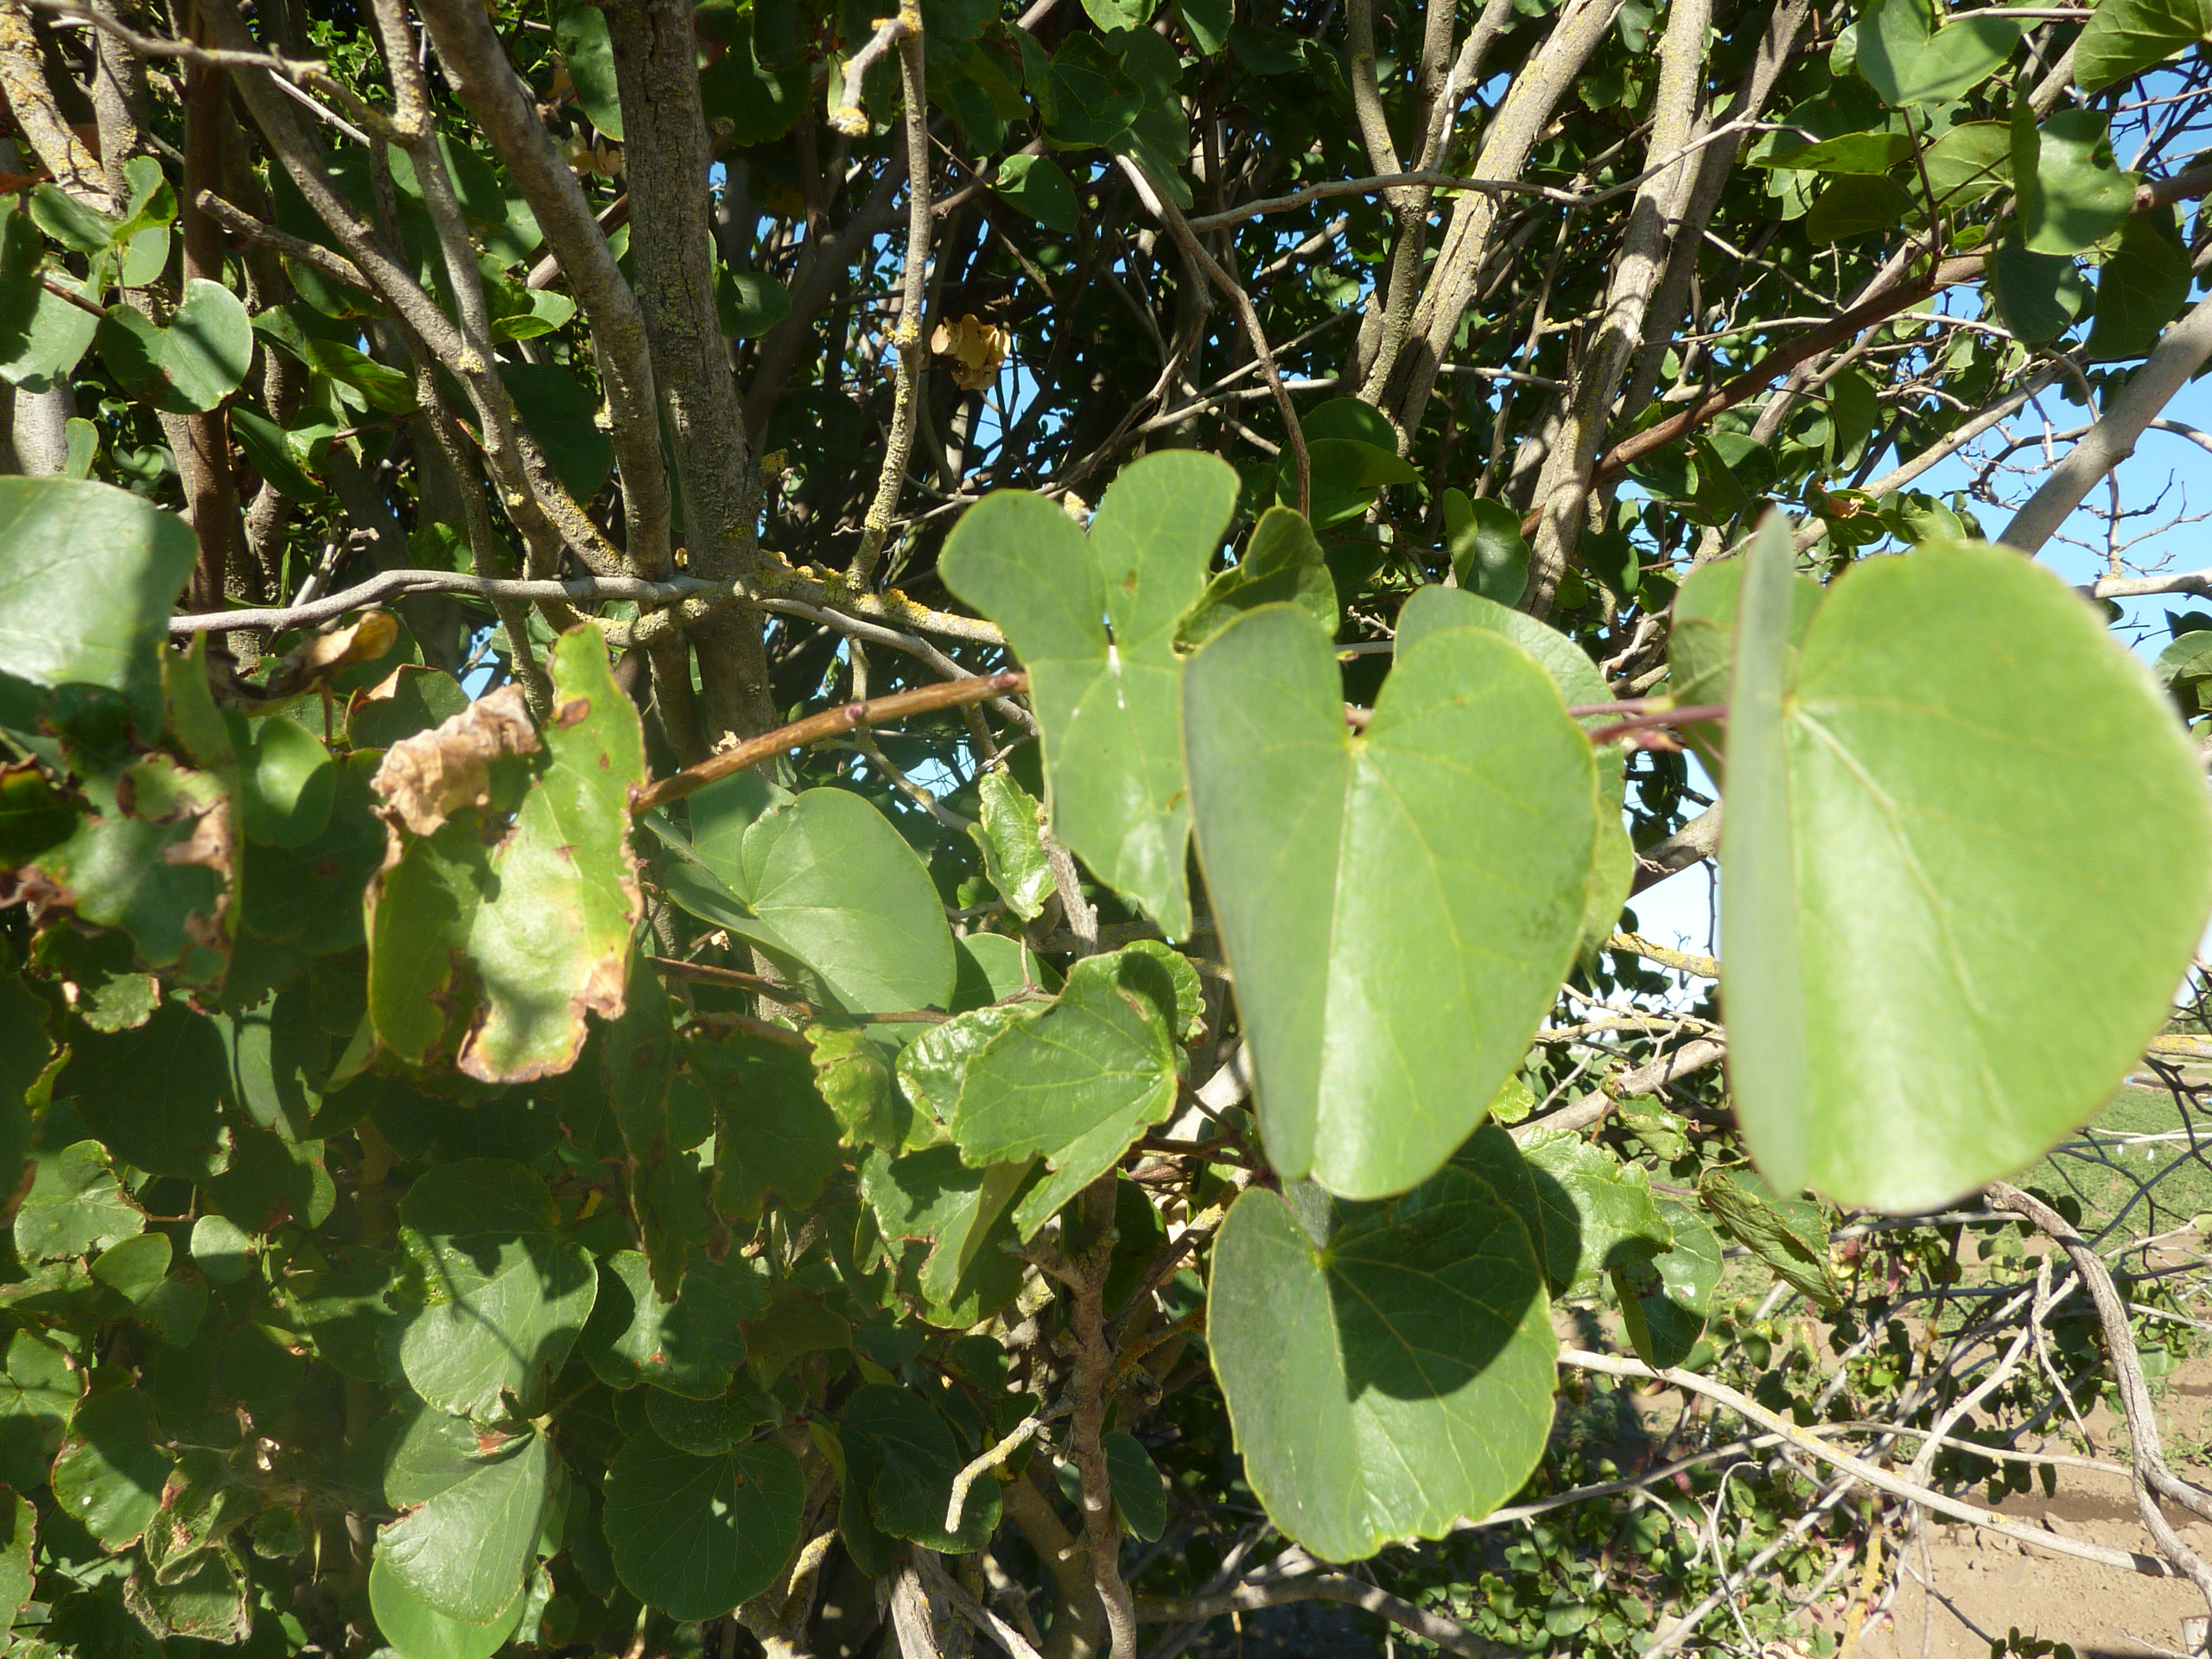 Closeup of Redbud leaves